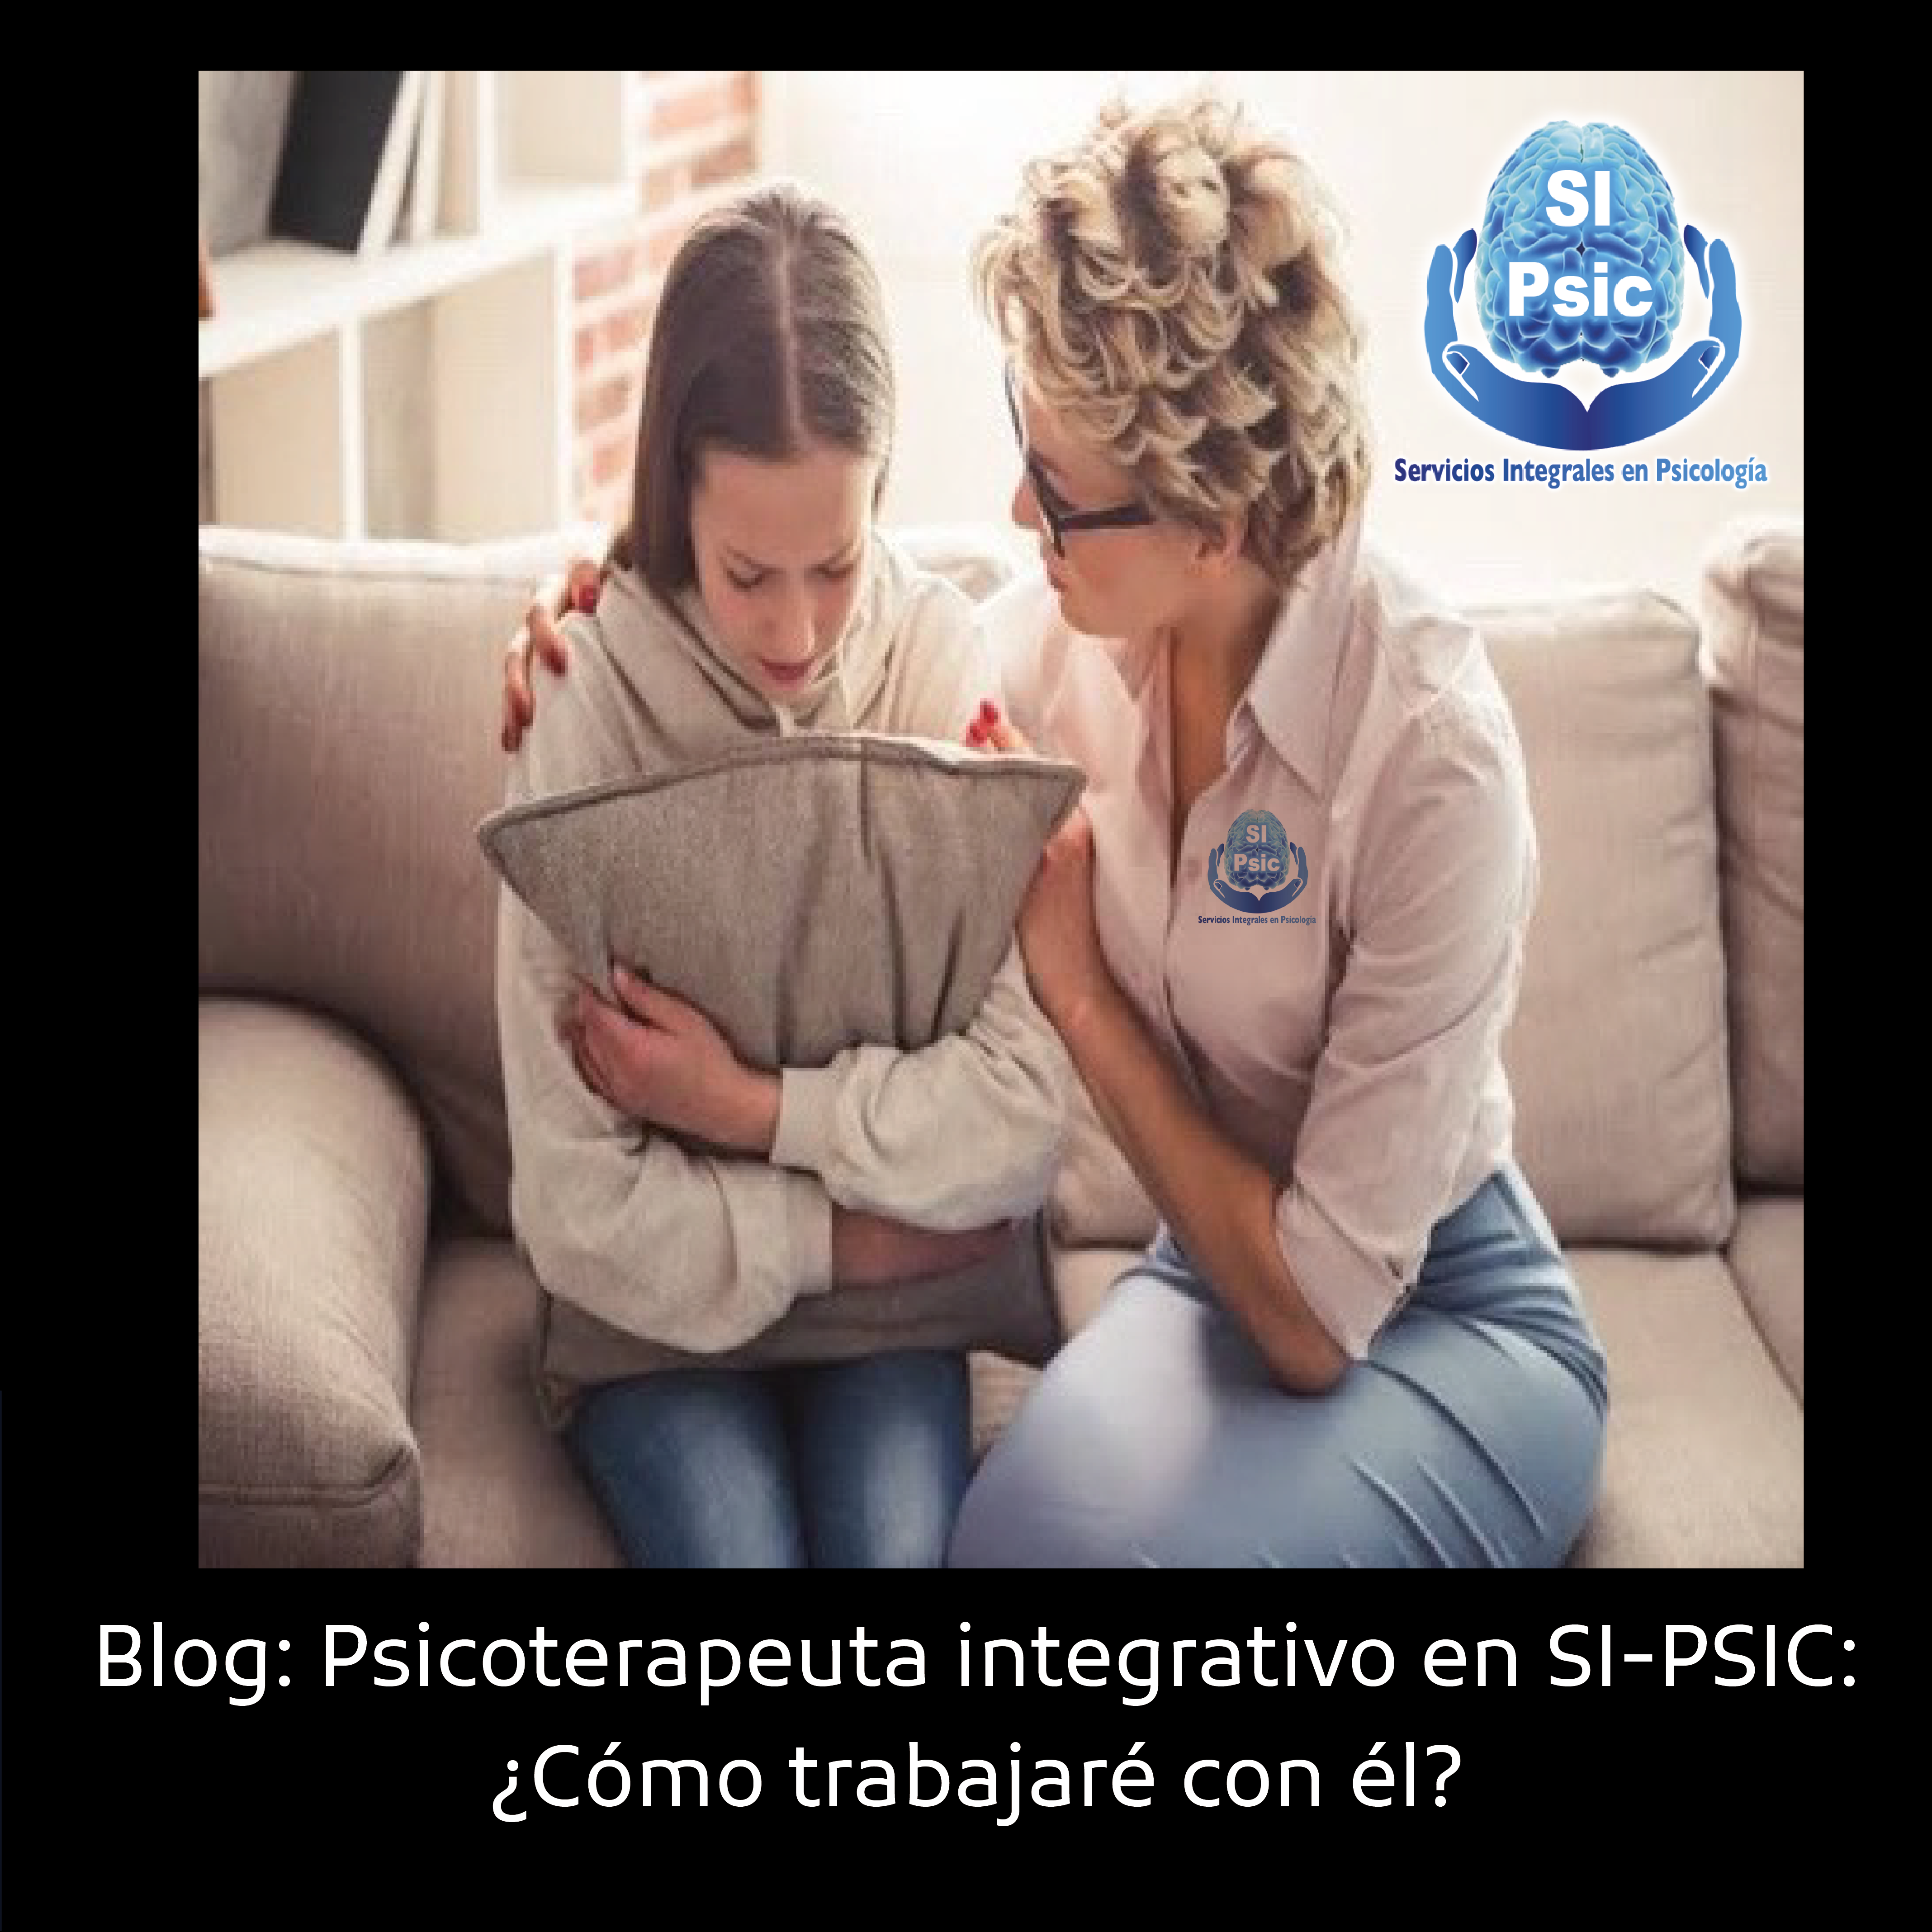 Blog 11: Psicoterapeuta integrativo en SI-PSIC